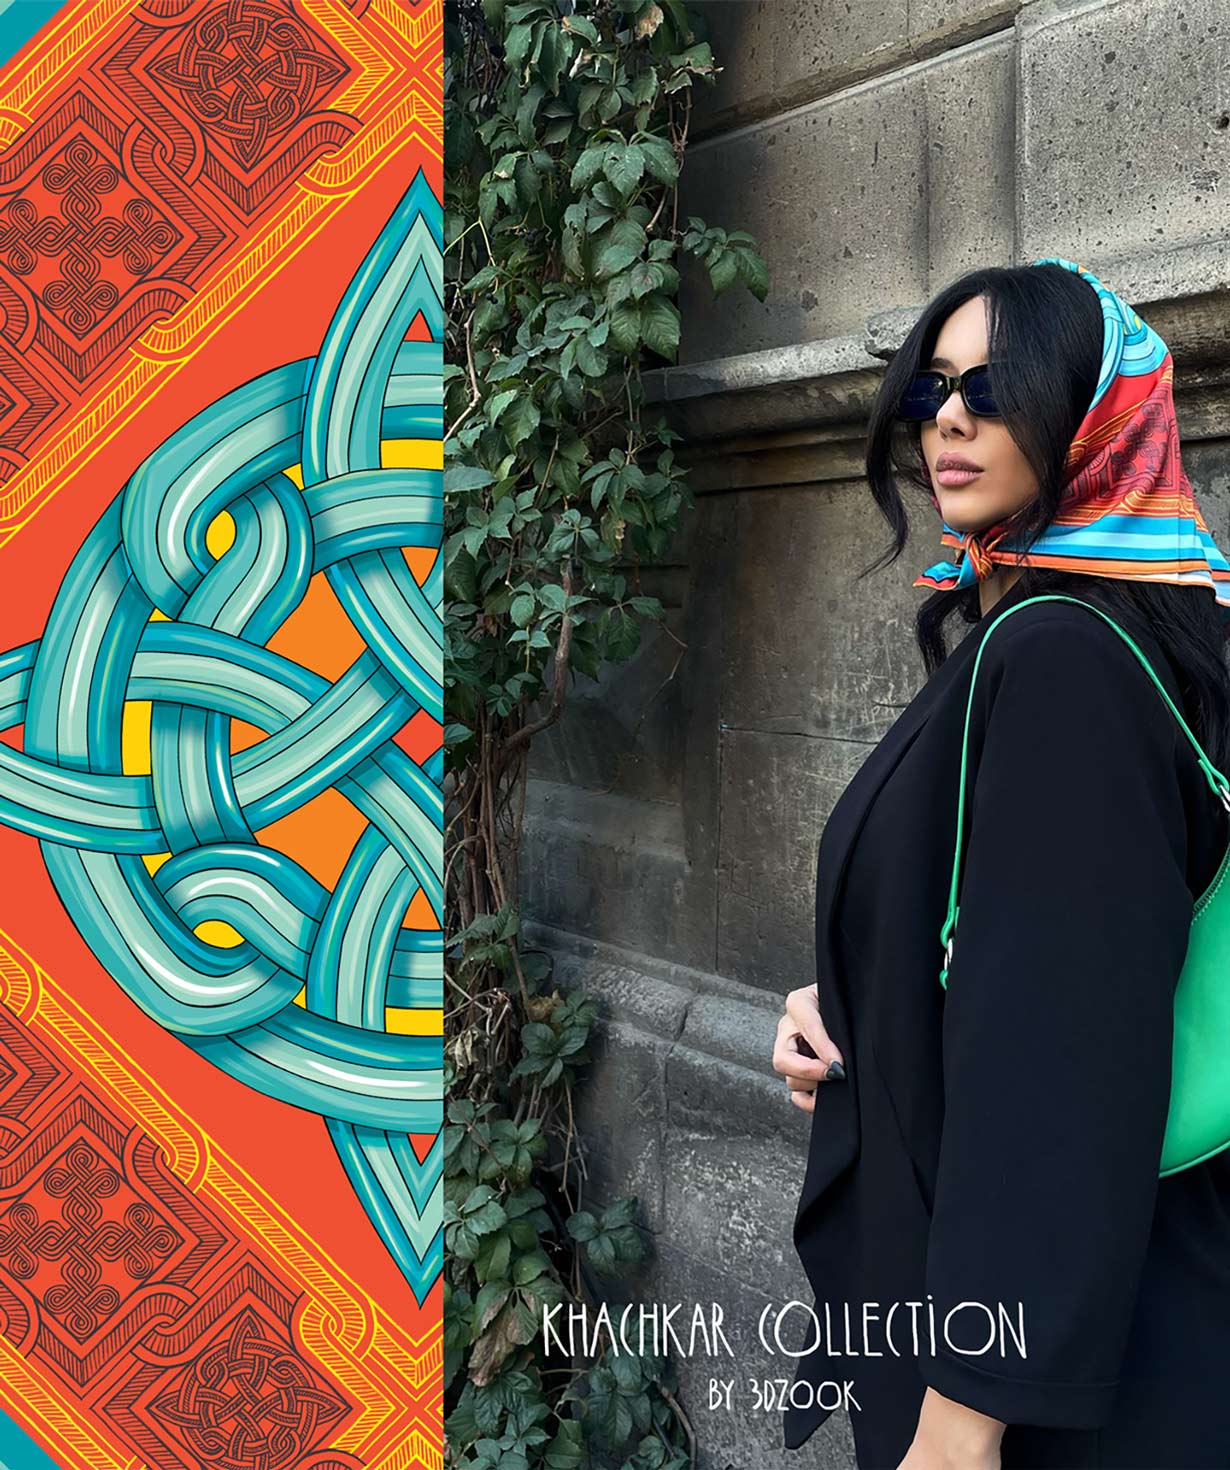 Silk scarf `3 dzook` with Armenian ornaments №9